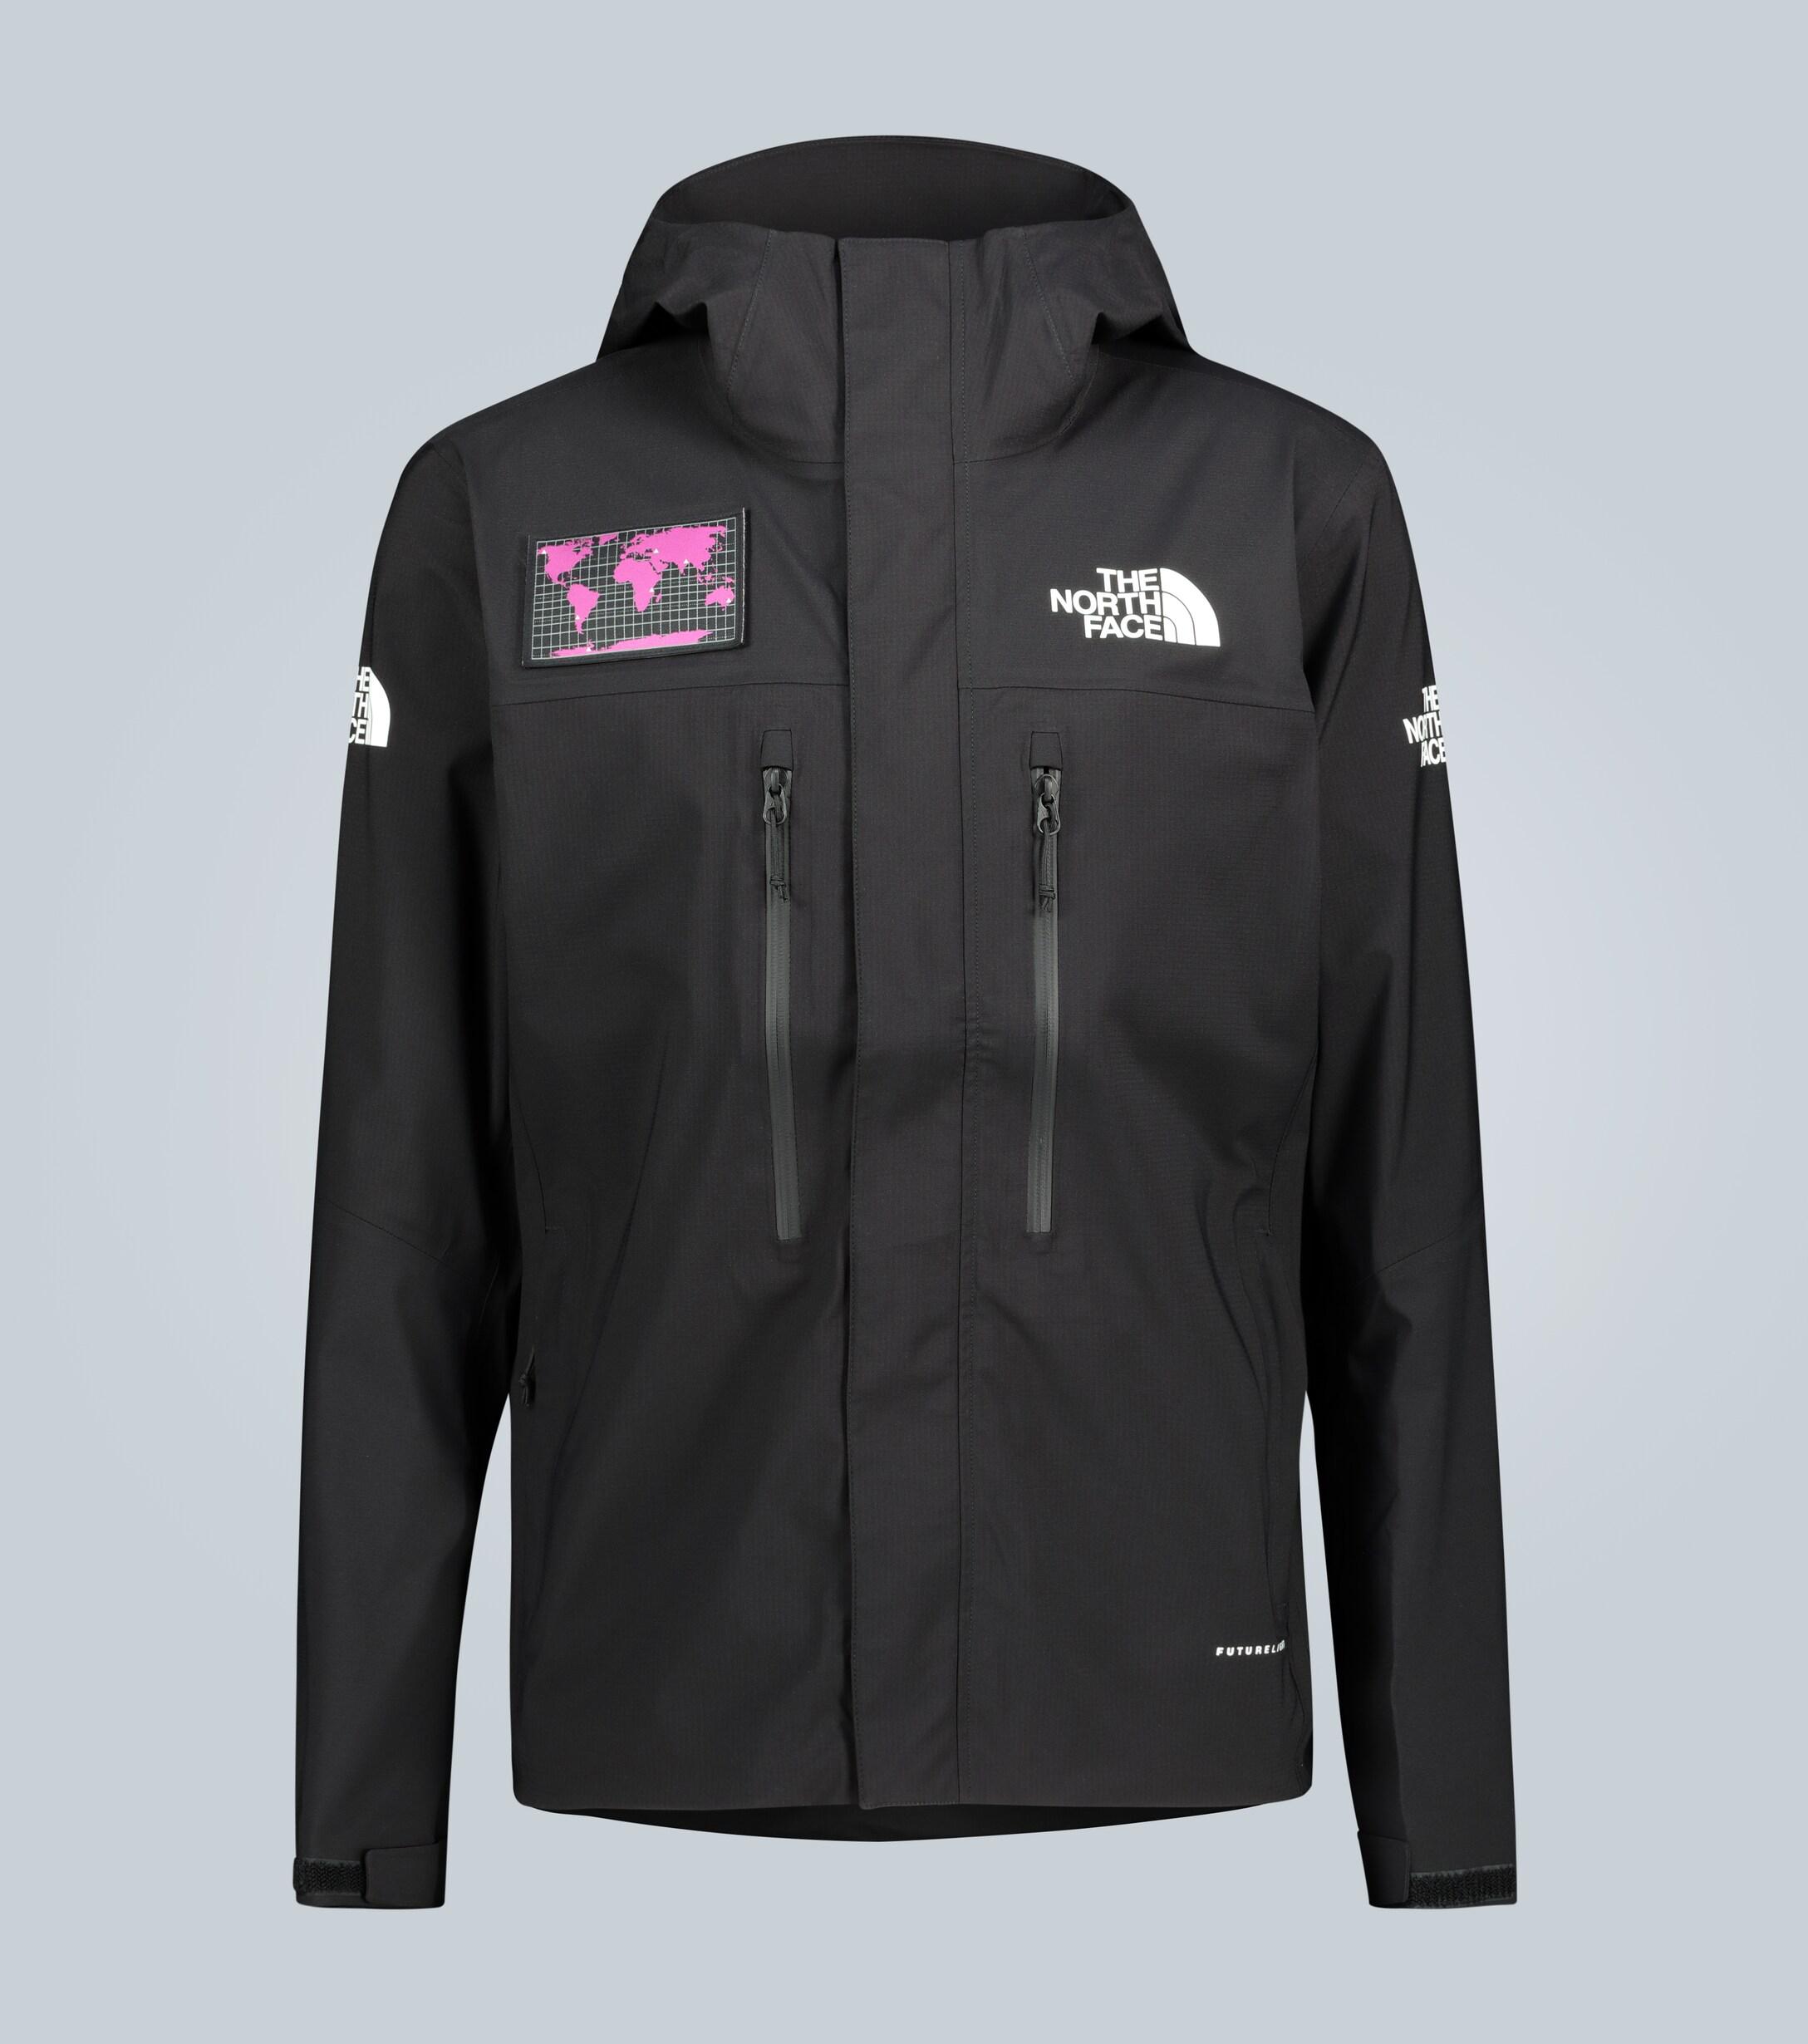 The North Face 7se Futurelighttm Jacket in Black for Men - Lyst